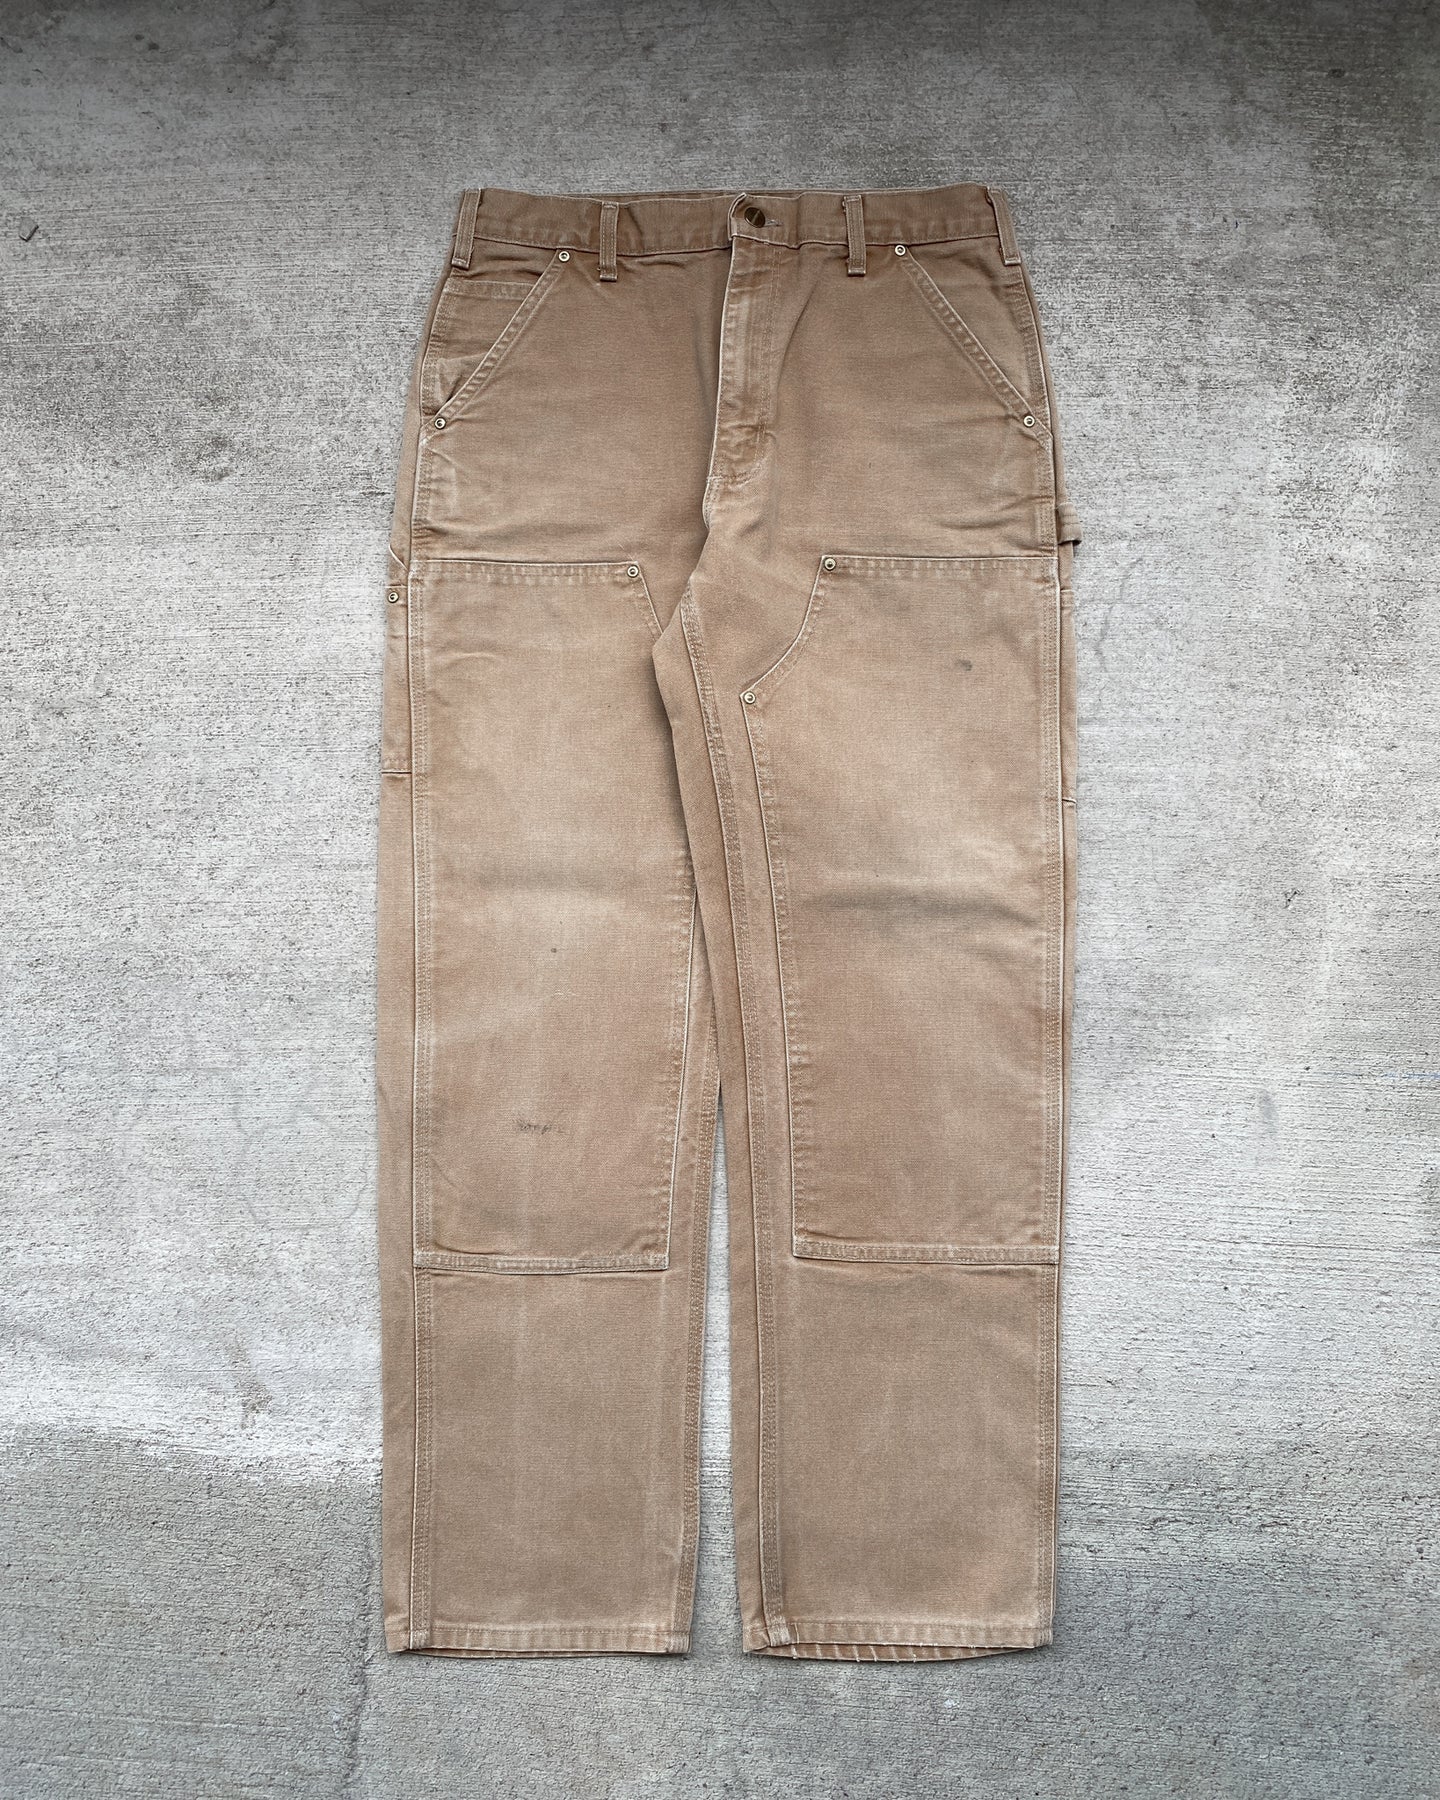 1990s Carhartt Tan Faded Double Knee Work Pants - Size 32 x 30